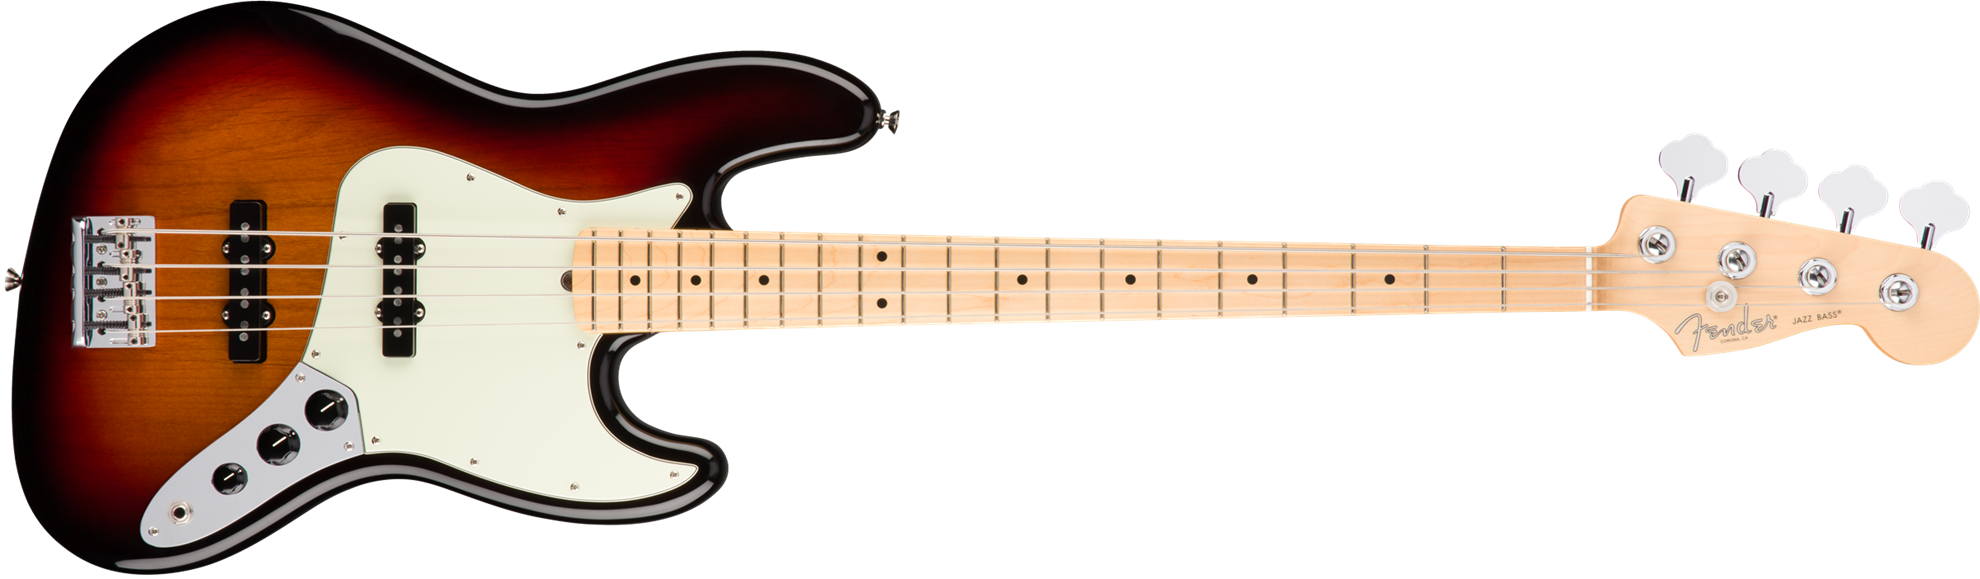 Fender American Professional Jazz Bass Guitar - Fender American Professional Jazz Bass Guitar (1980x579)